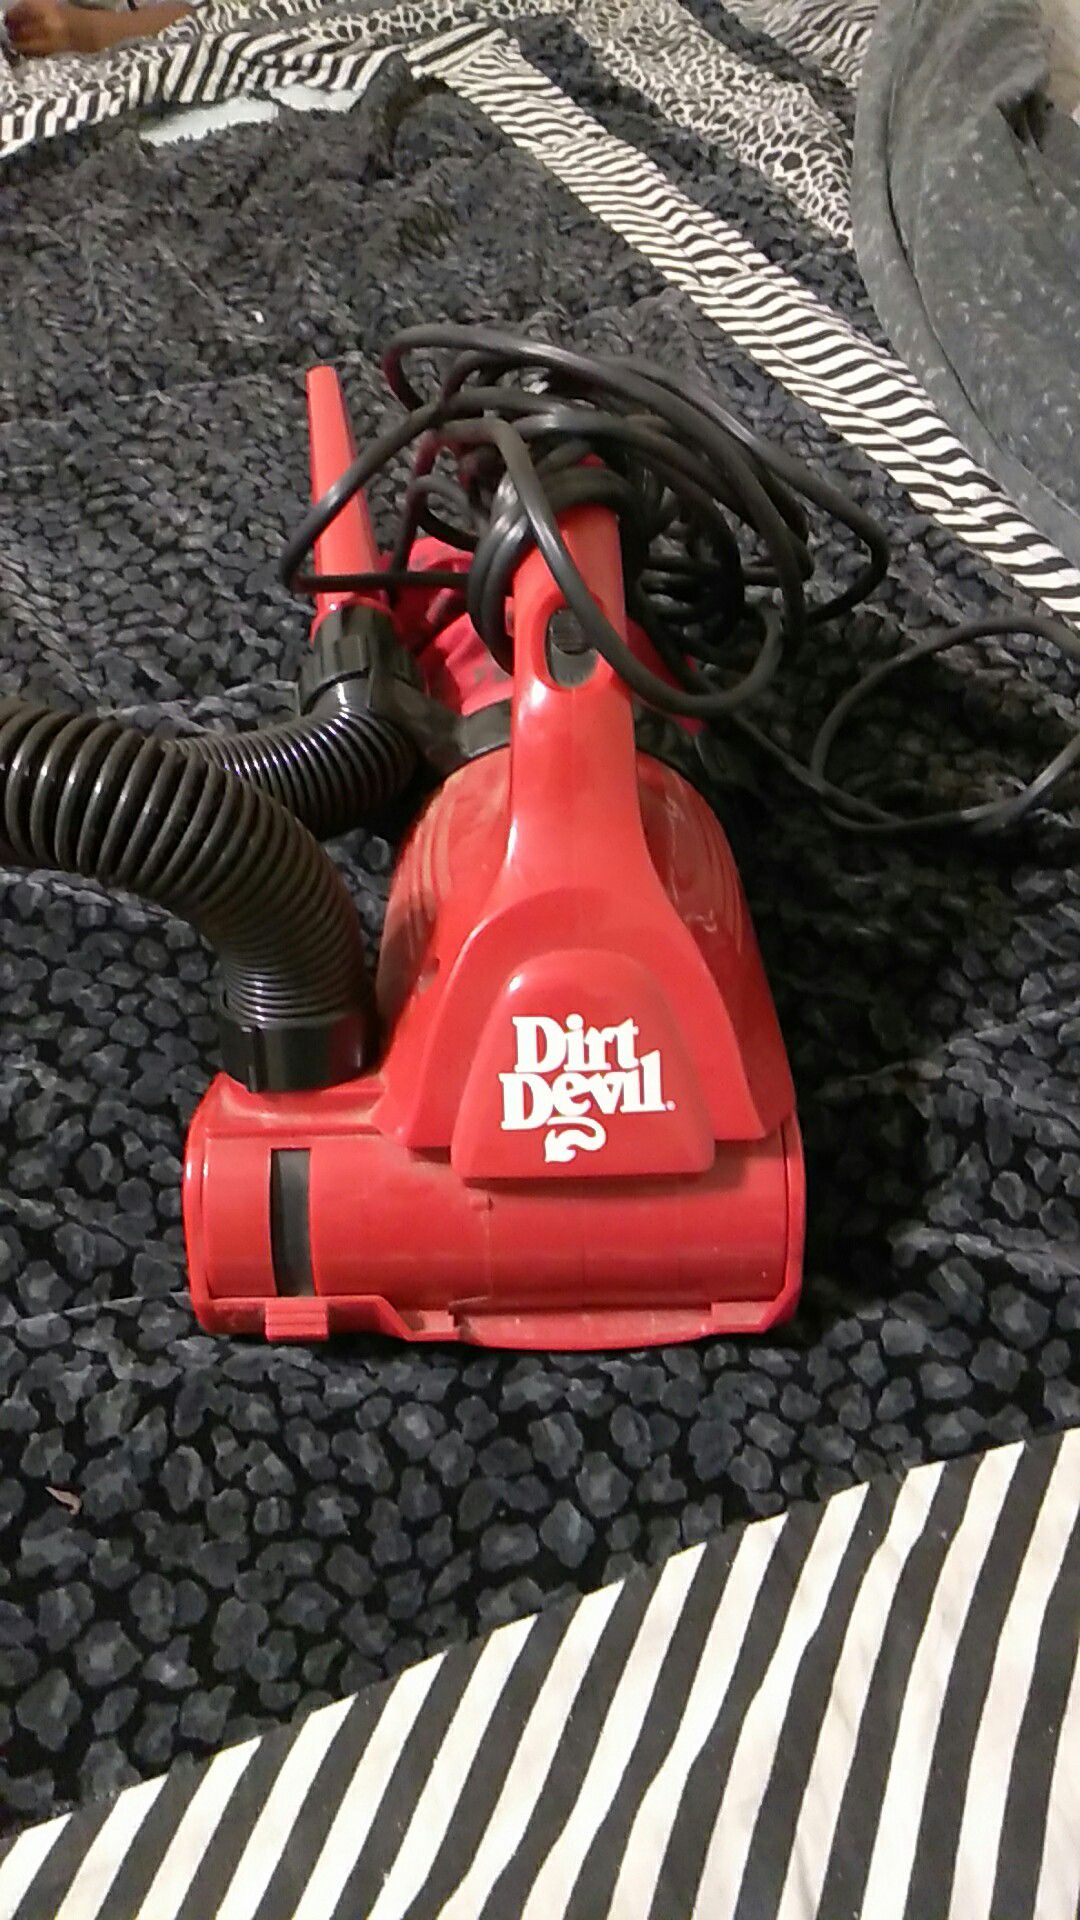 Dirt Devil hand vacuum